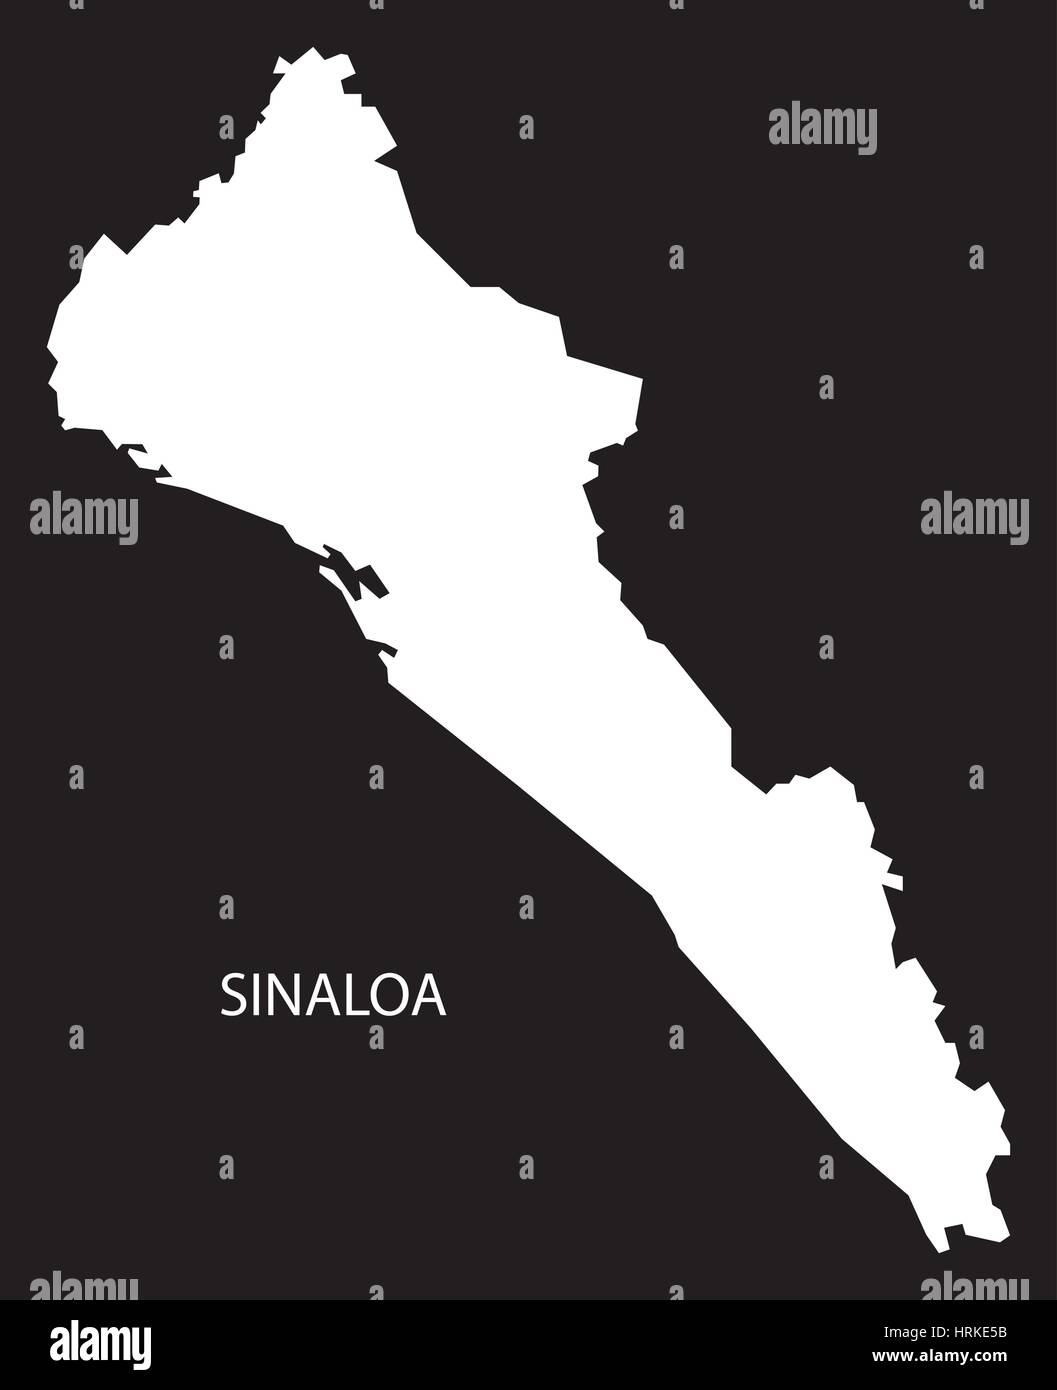 Sinaloa Mexico Map black inverted silhouette Stock Vector